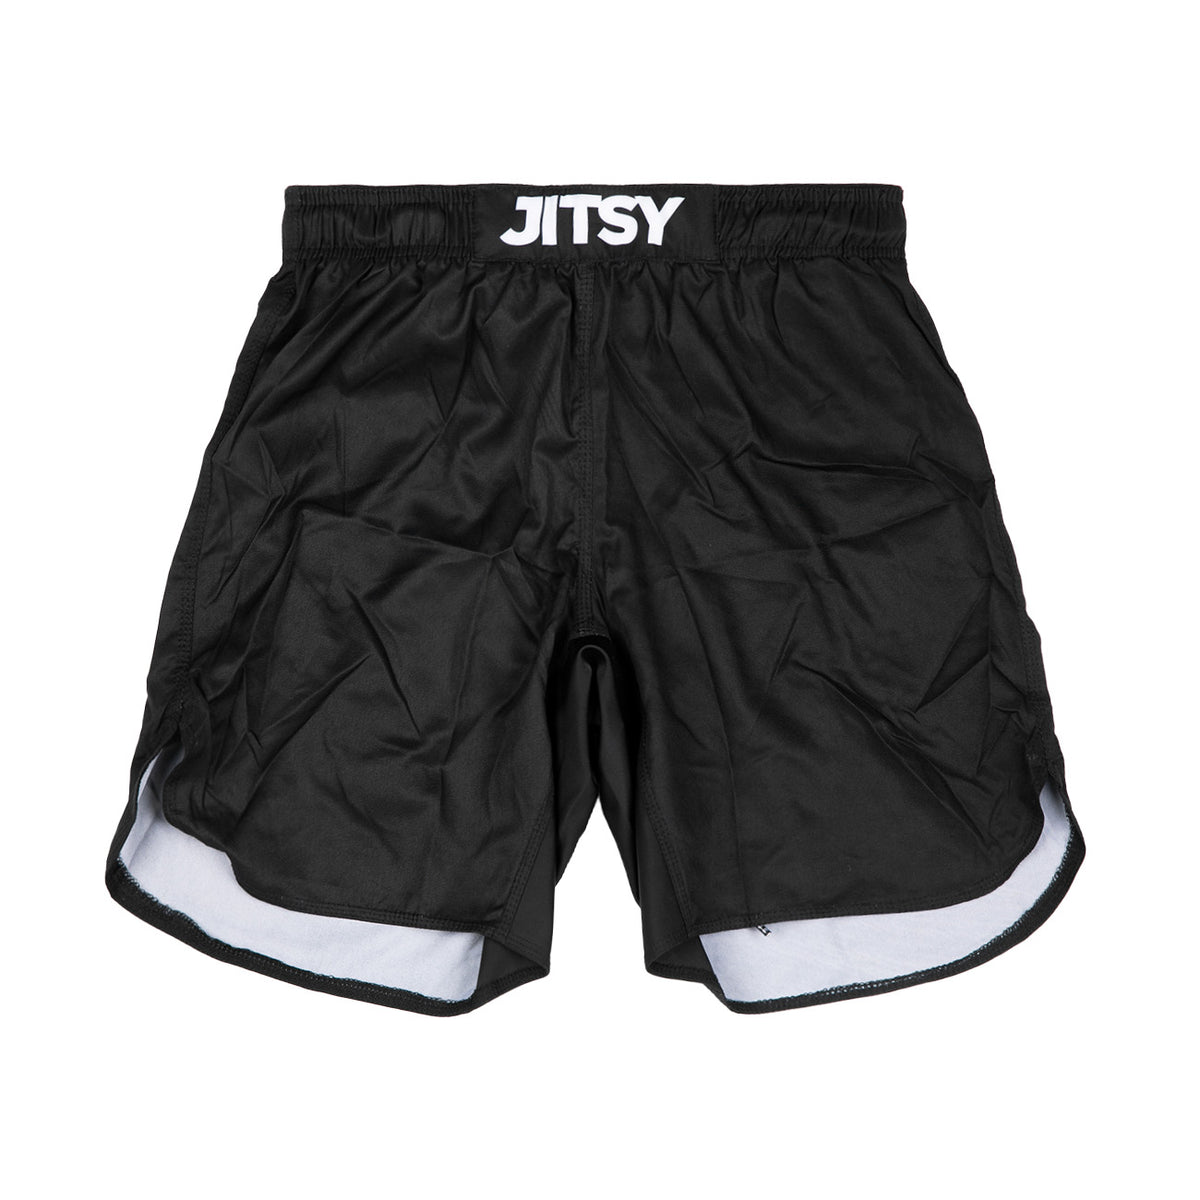 Jitsy Black Grappling Shorts - Big Men